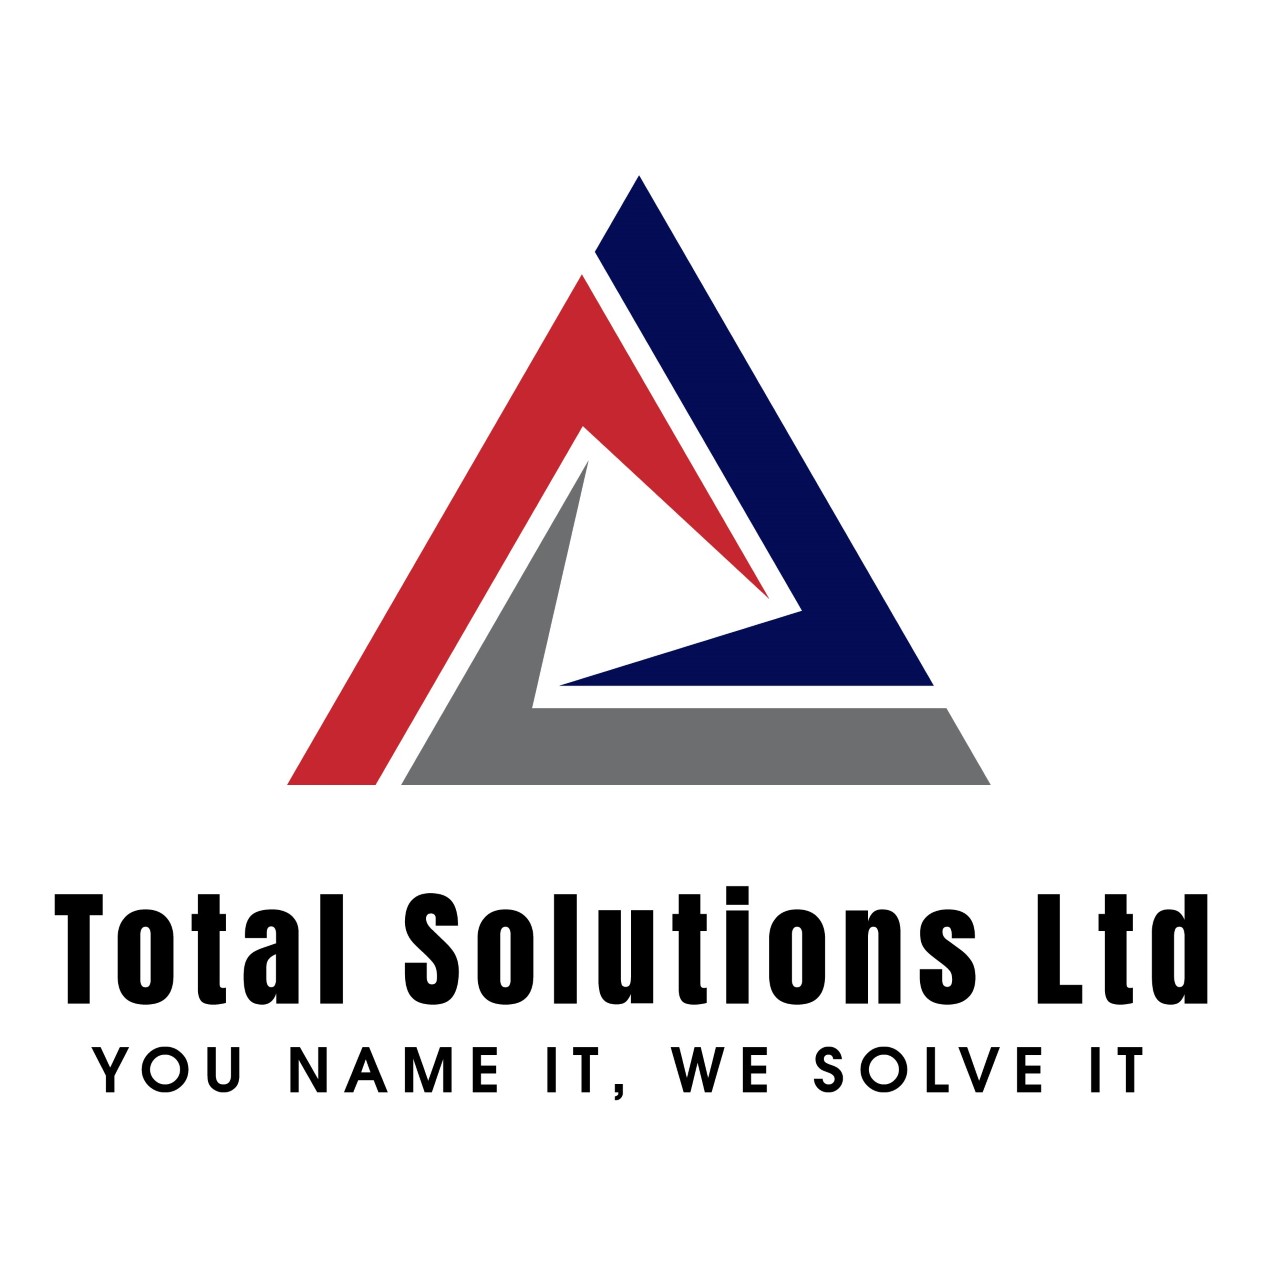 Total Solutions Ltd. logo